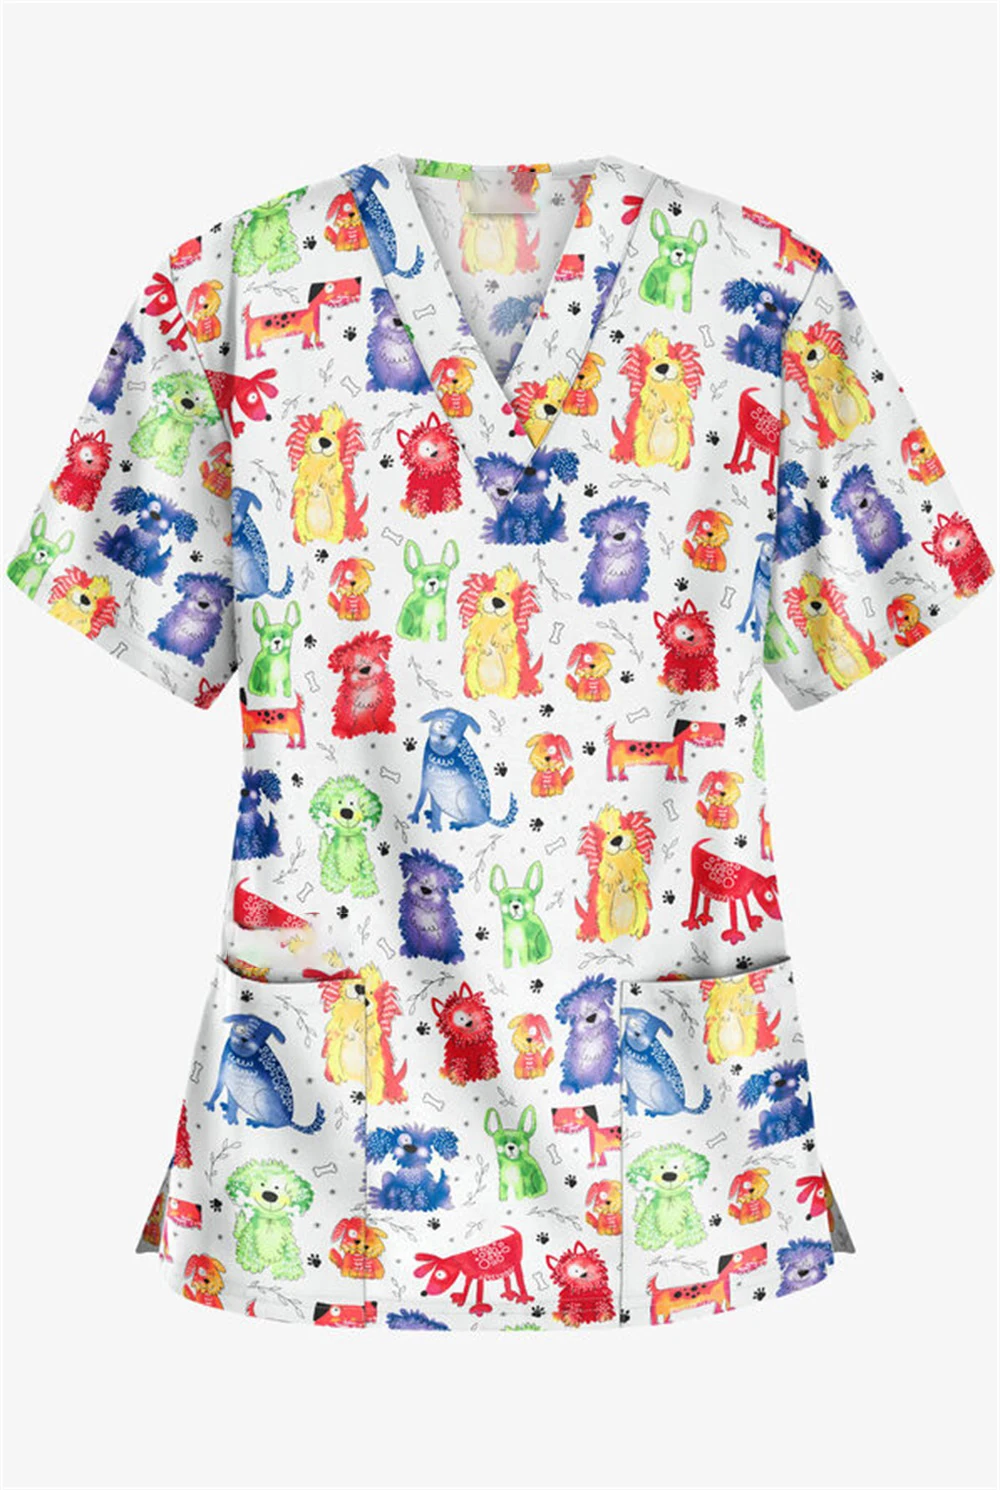 

New Frosted Fancy Retro Cartoon V Neck Printed Pocket Scrub Shirt Clothes Overalls Short Sleeve Dental Nurse Scrub Uniform Shirt